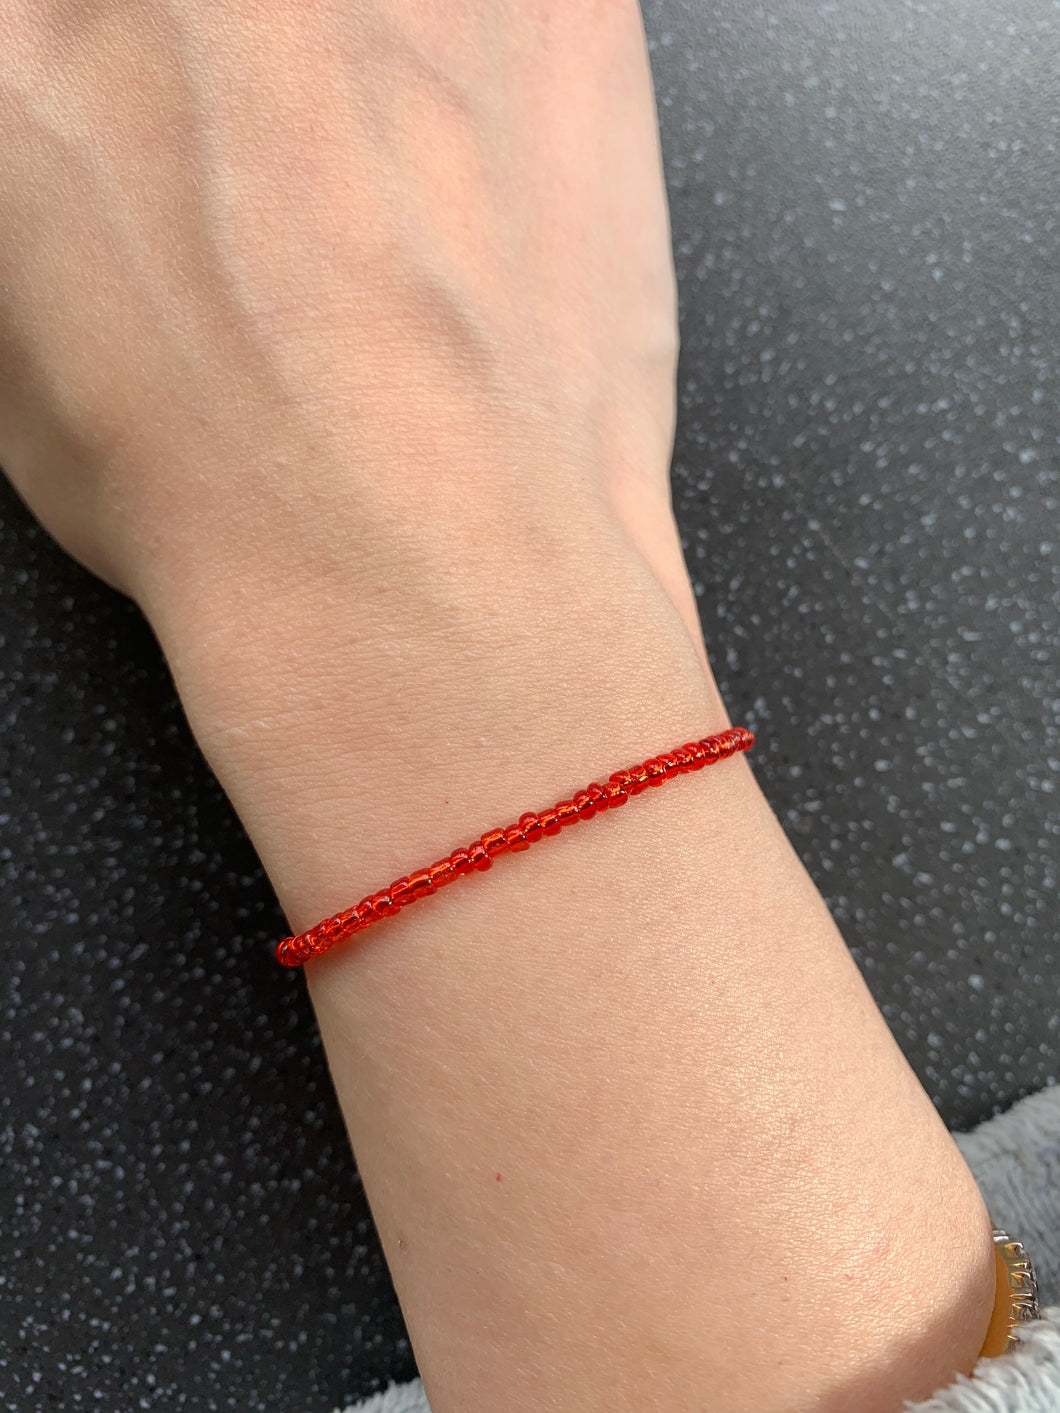 Kabbalah Red Protection String Intention Tie Manifesting Bracelet